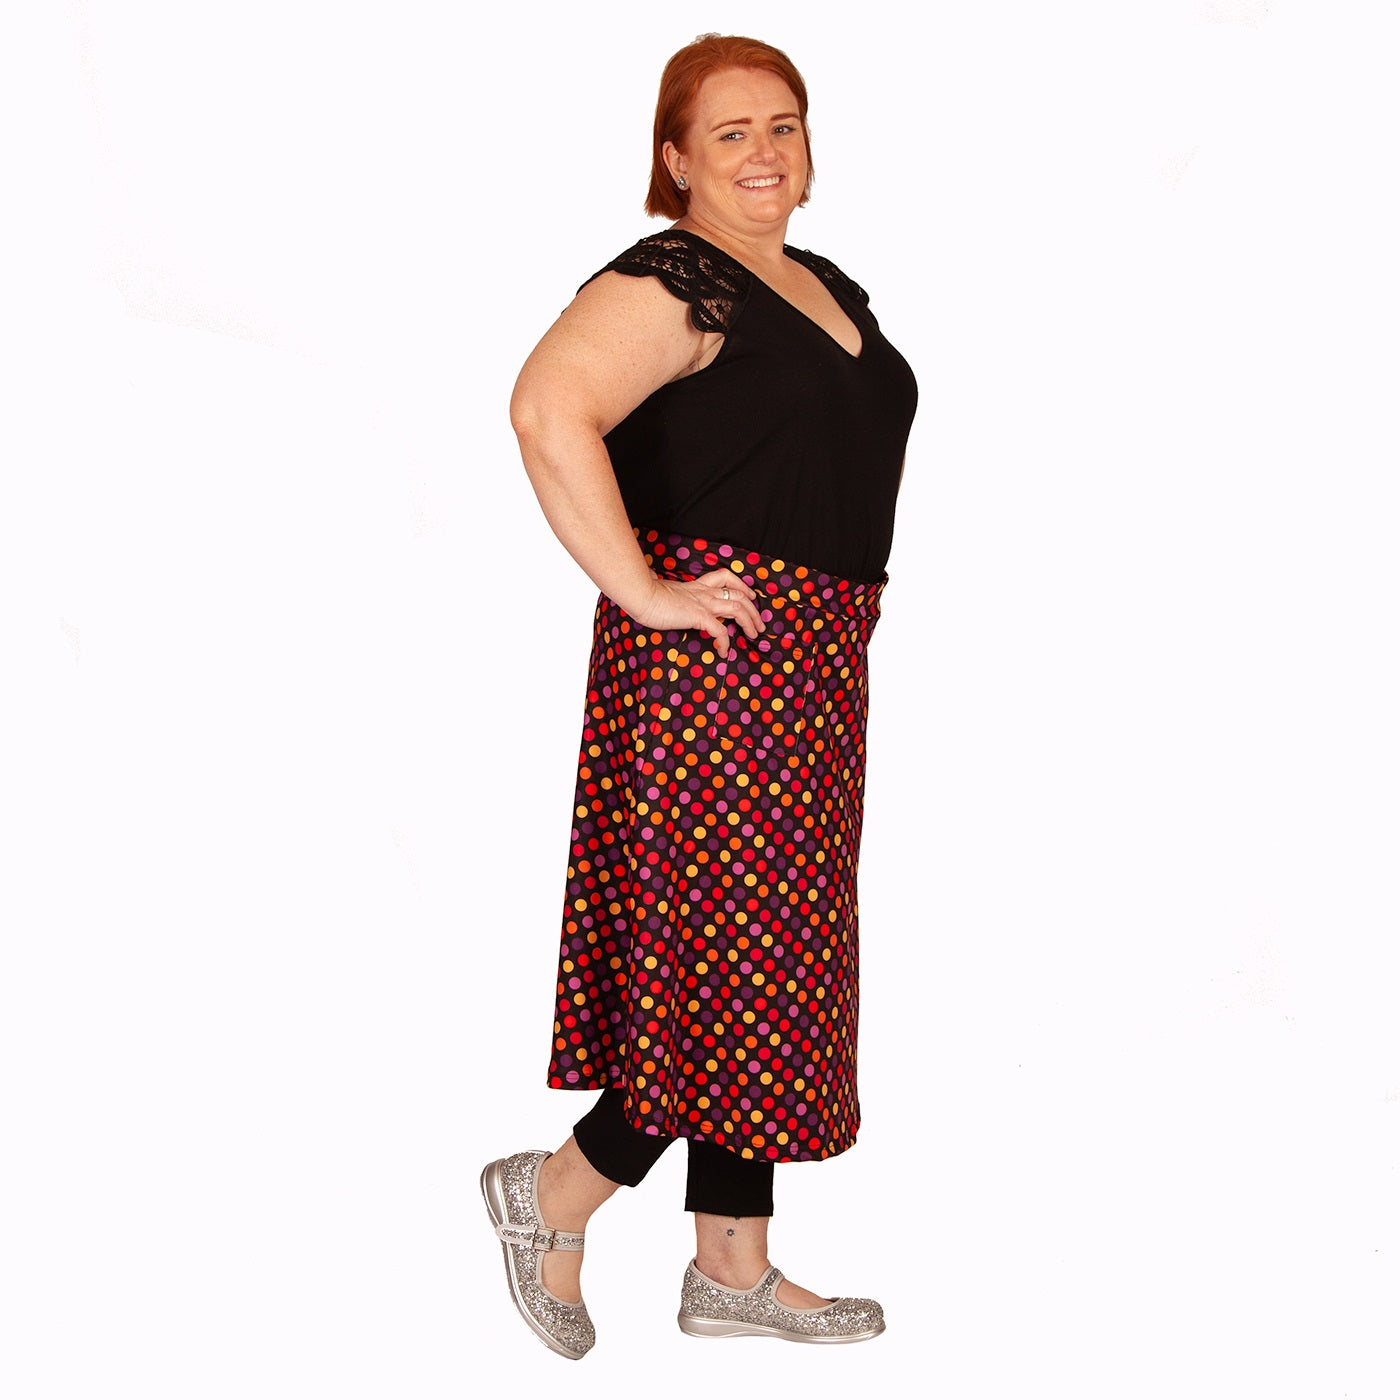 Pastel Confetti Original Skirt by RainbowsAndFairies.com (Polka Dots - Stripes - Spots - Skirt With Pockets - Aline Skirt - Vintage Inspired - Rock & Roll) - SKU: CL_OSKRT_CONFT_PAS - Pic 06